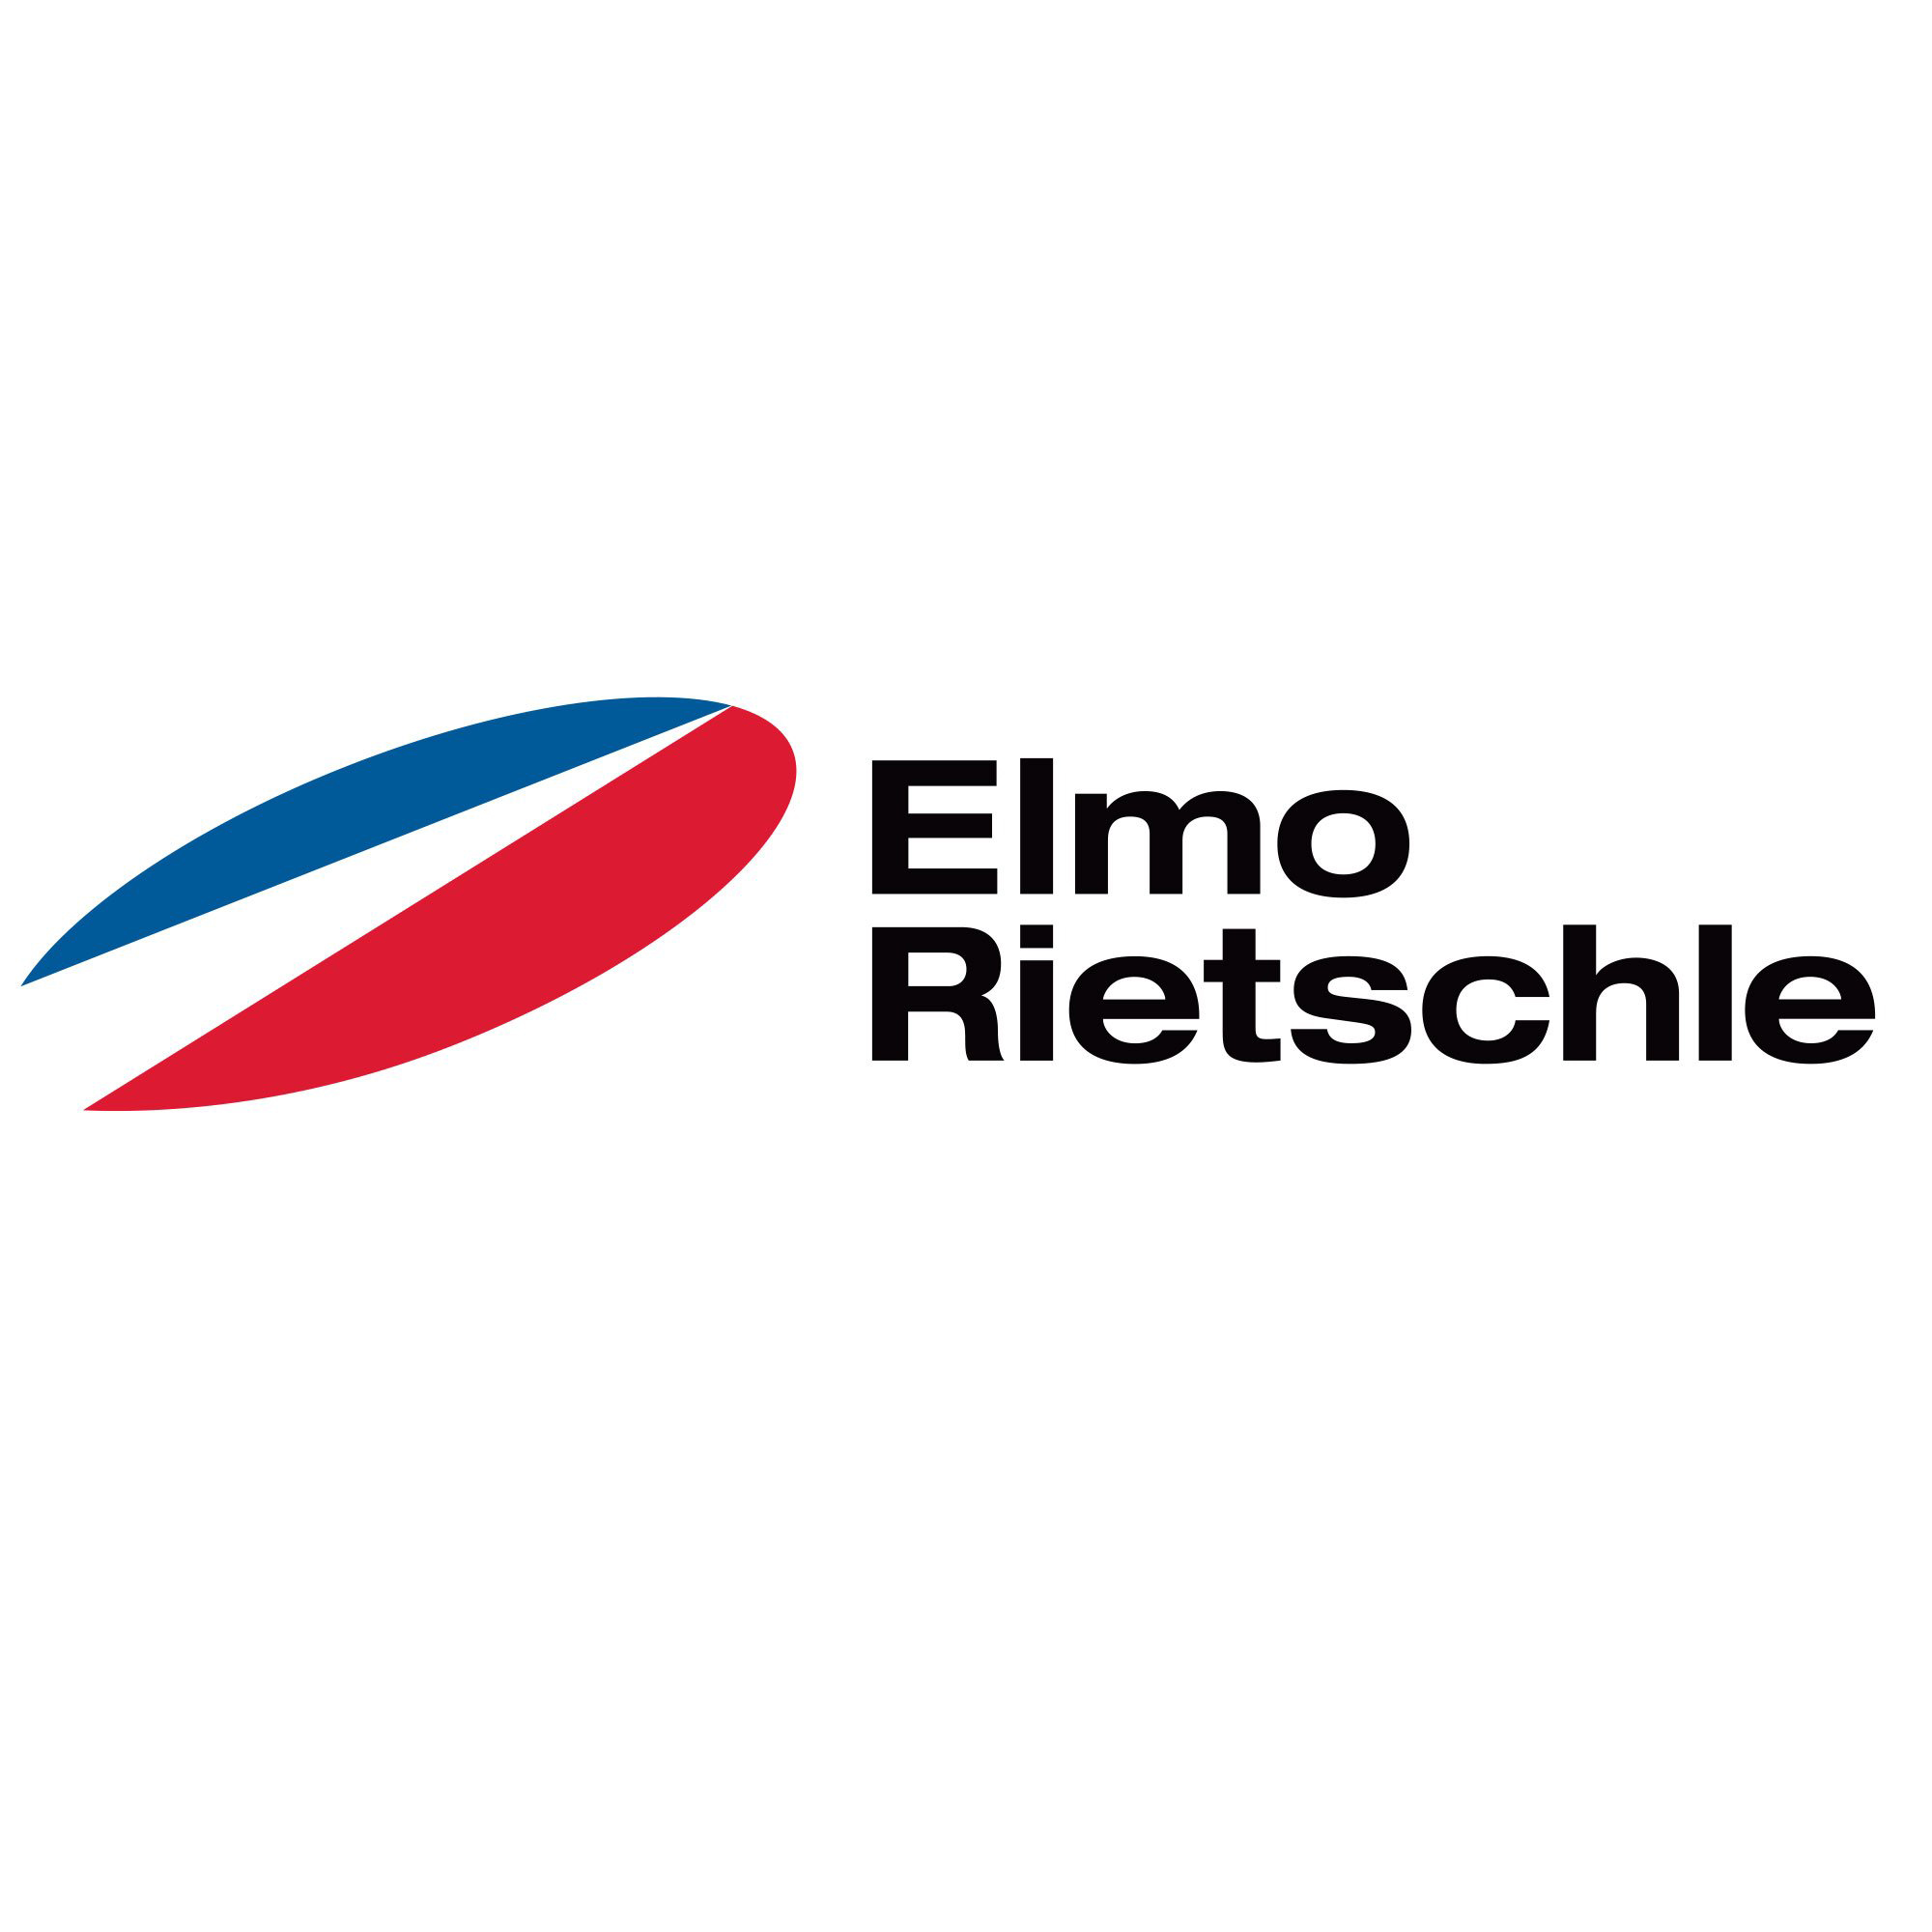 Elmo Rietschle bombas